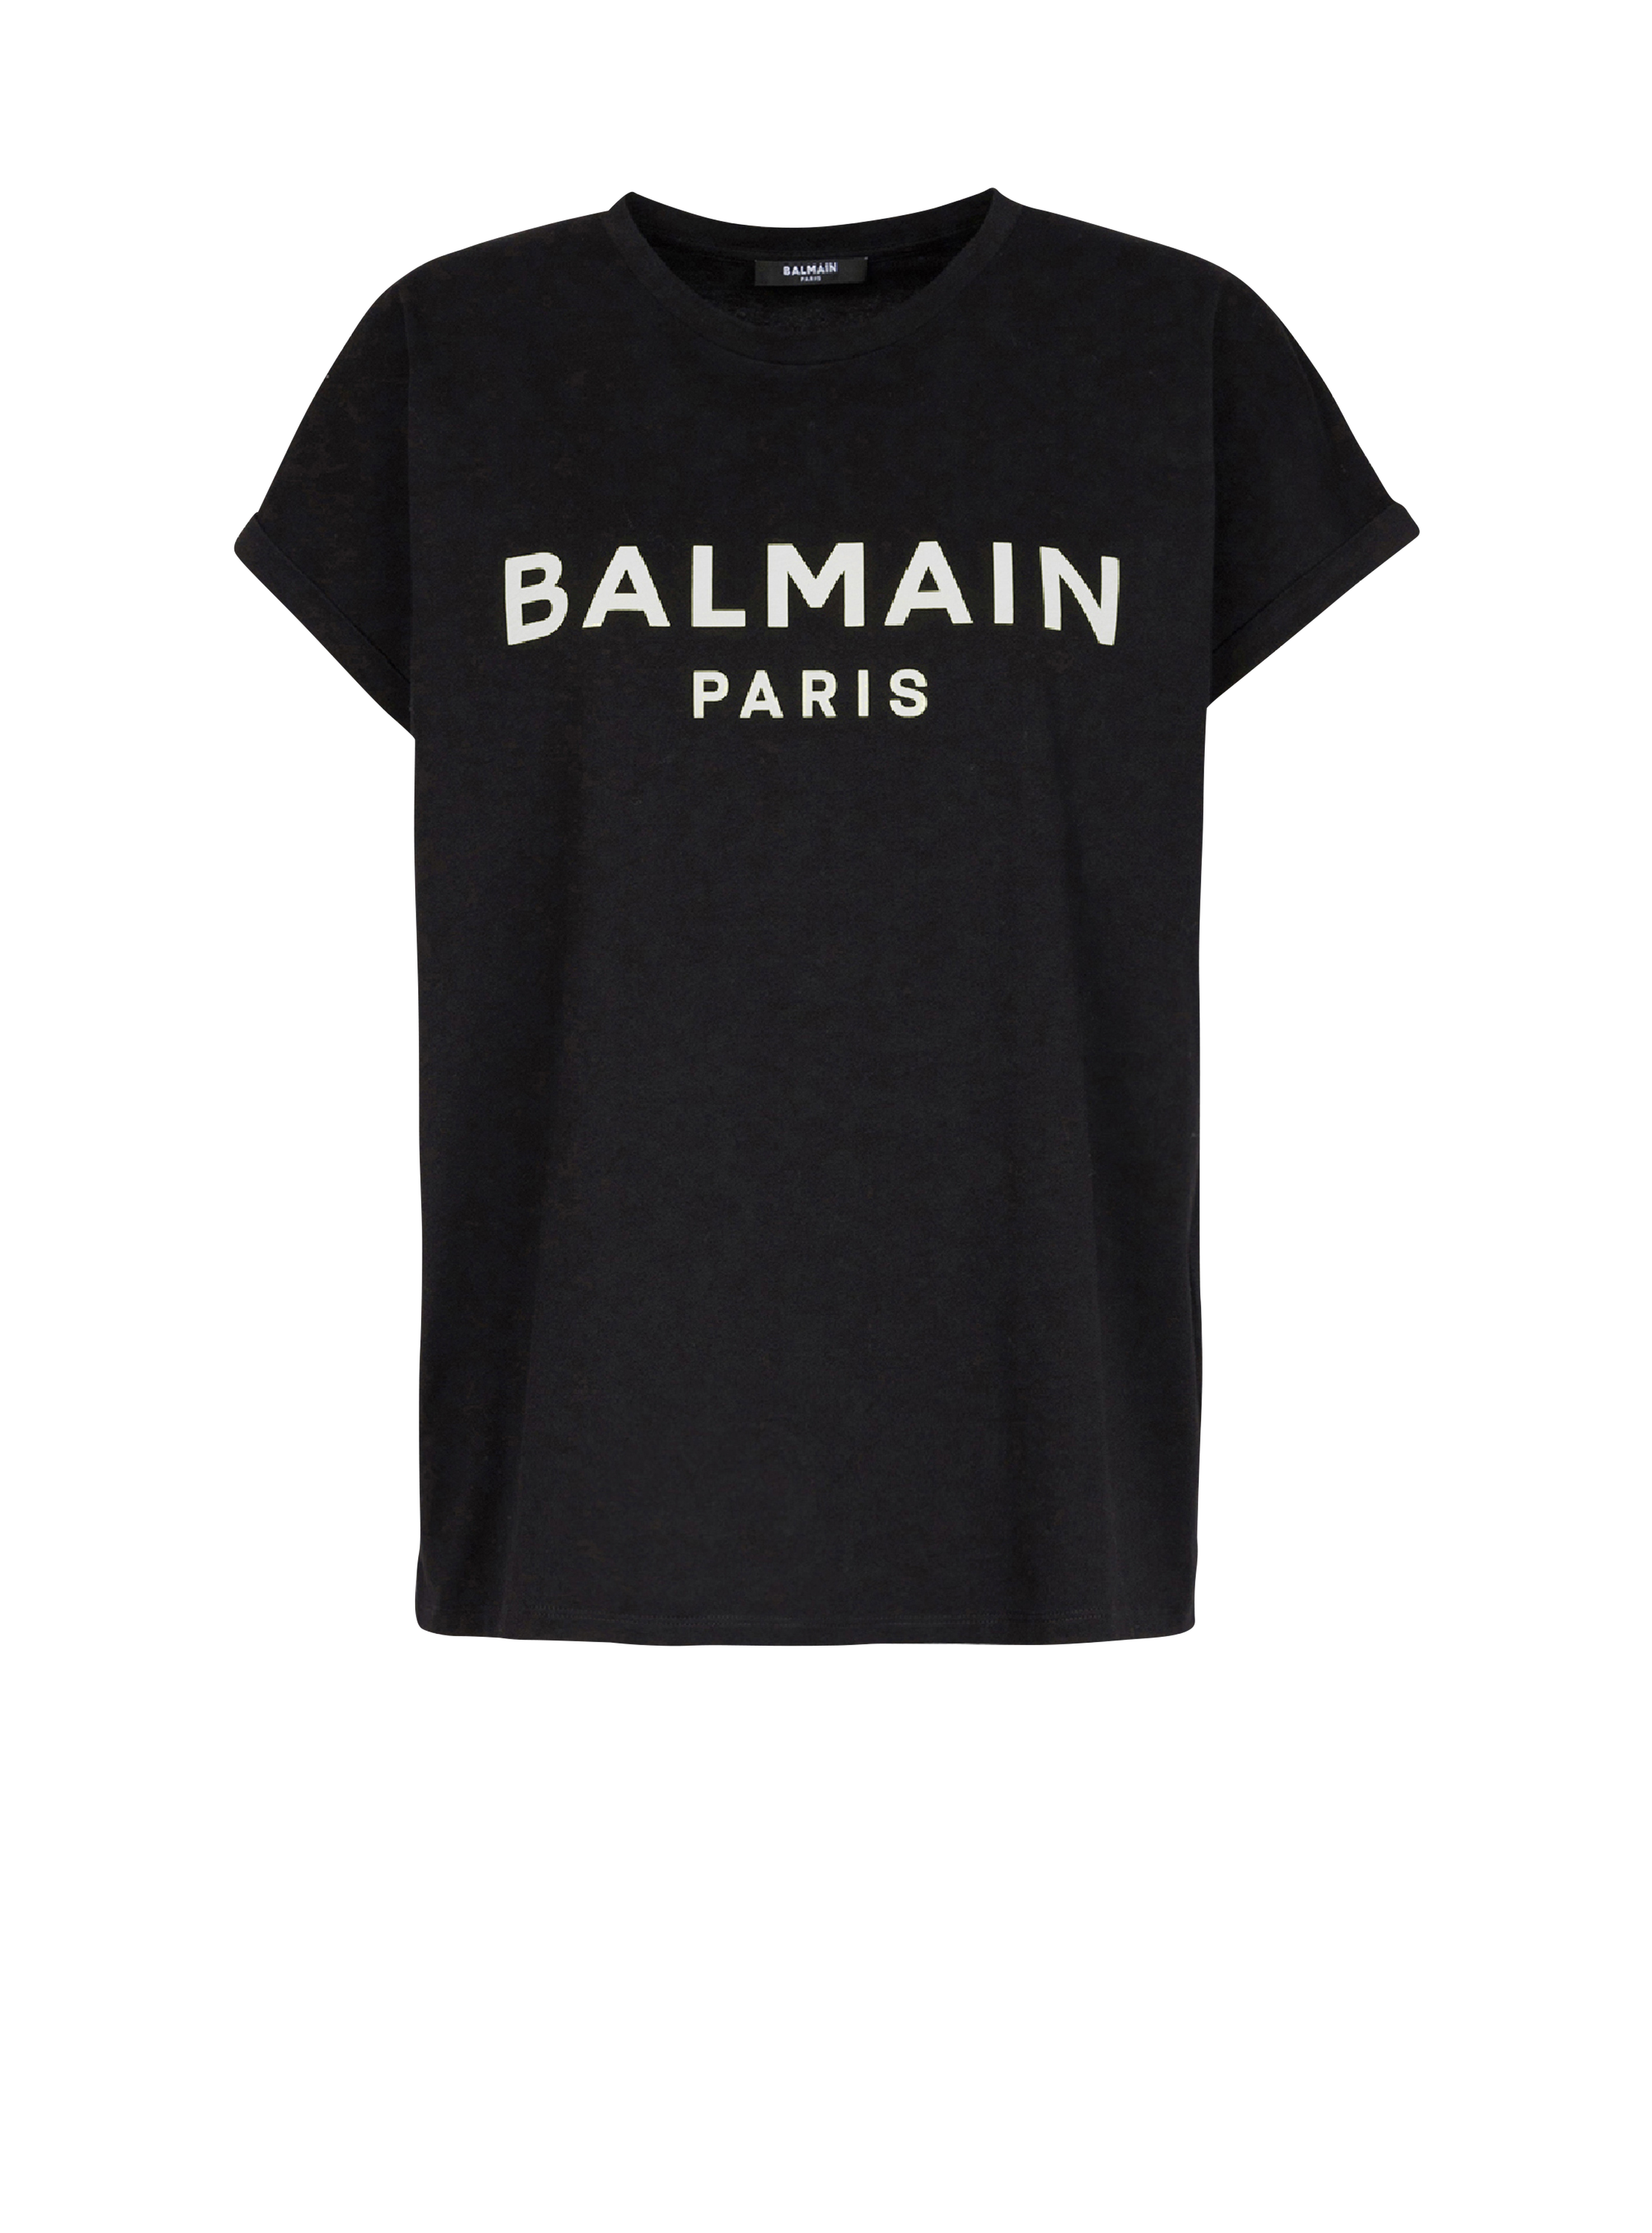 T-shirt en coton éco-design imprimé logo Balmain, noir